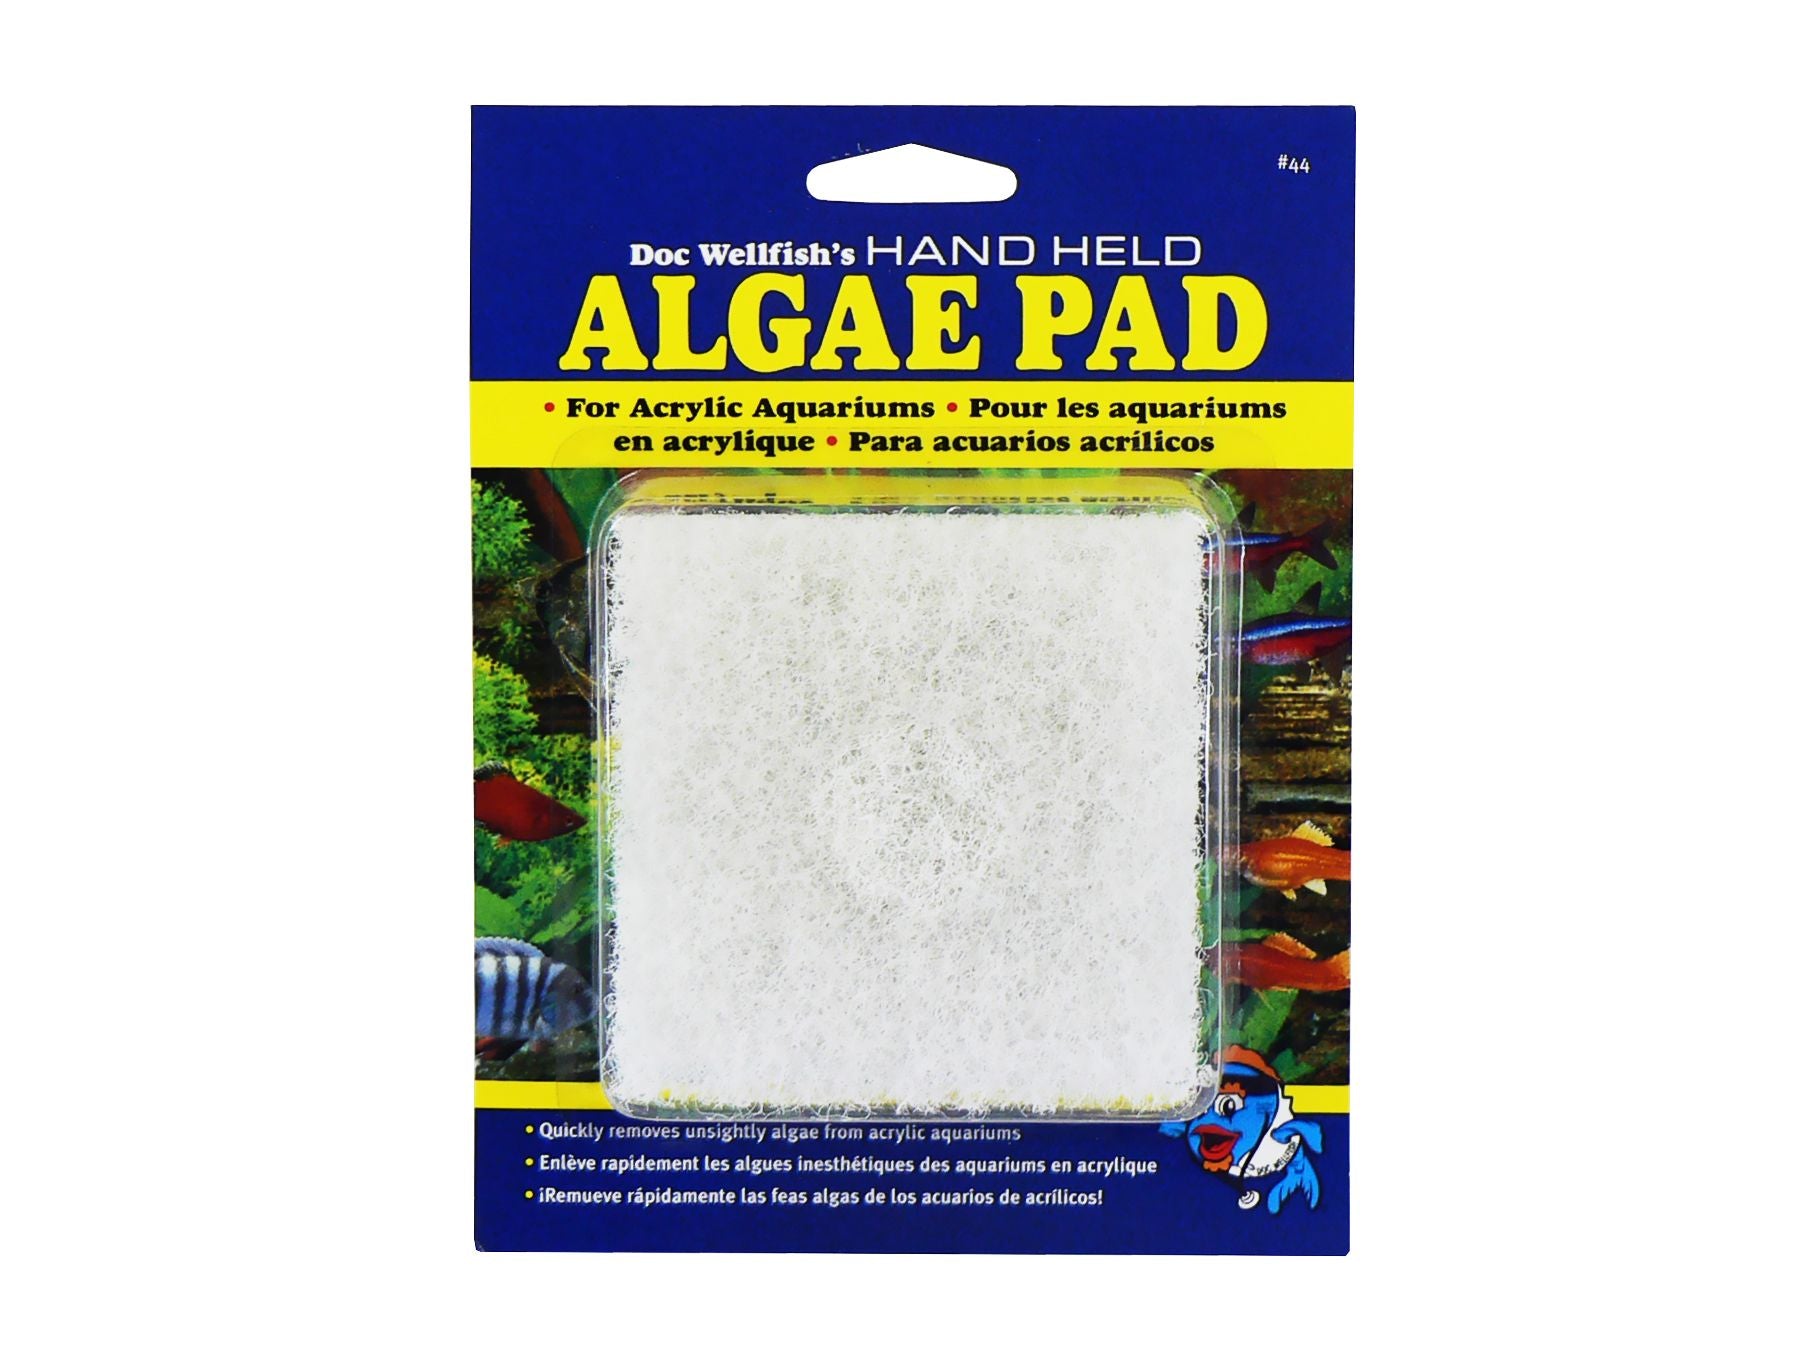 Api Algae Pad For Acrylic Tank - Wag n Tails Pet Shop